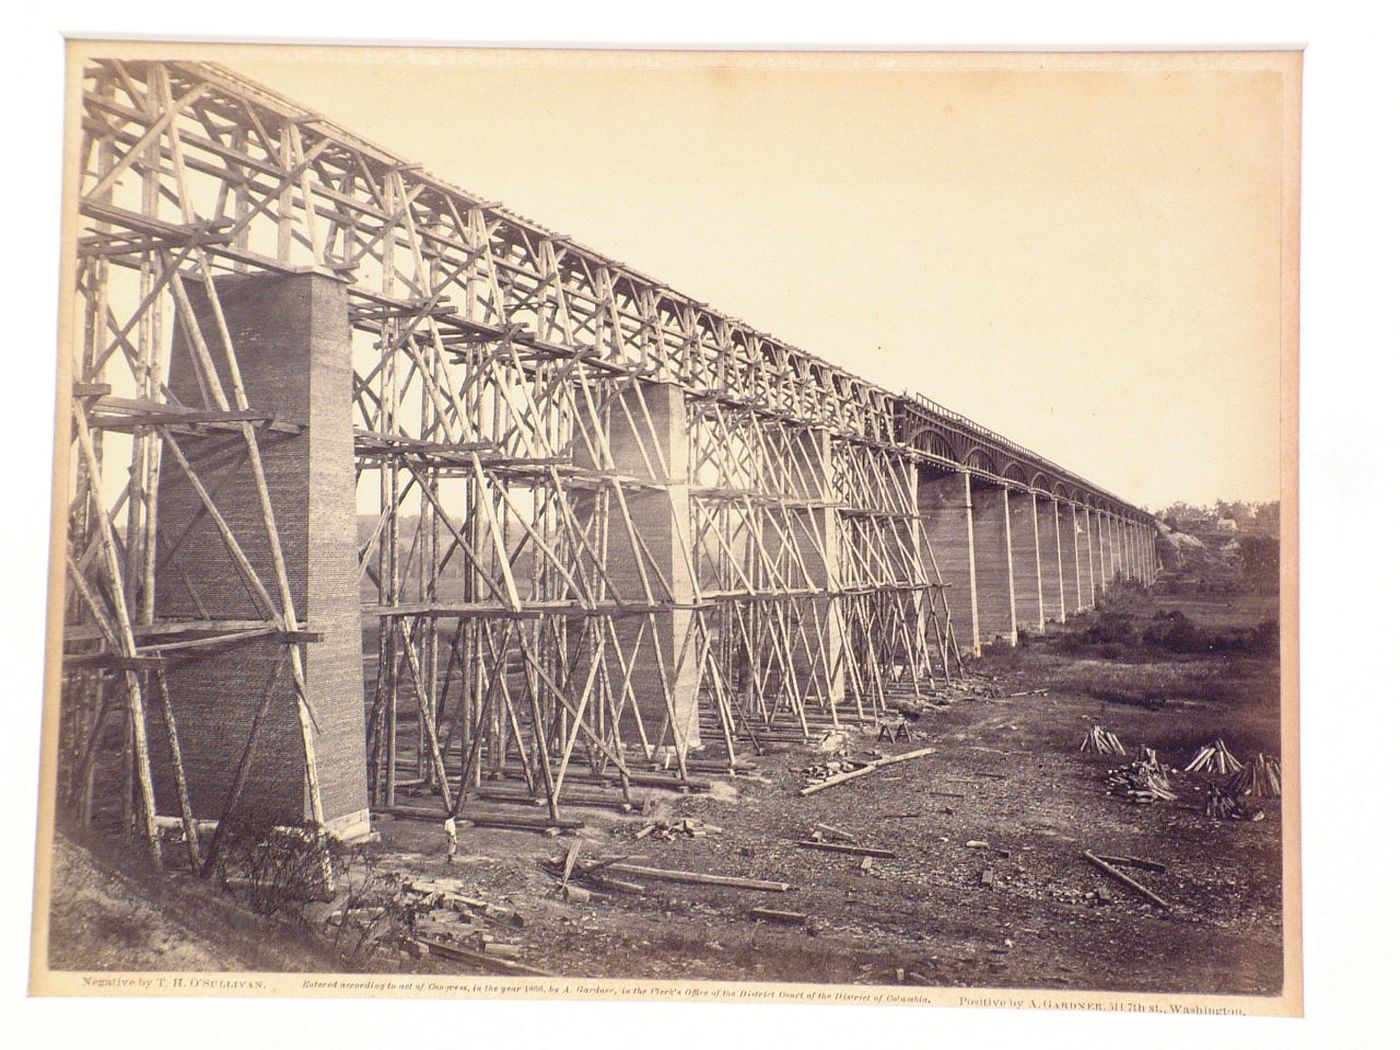 View of High Bridge under renovation, near Farmville, Virginia, United States